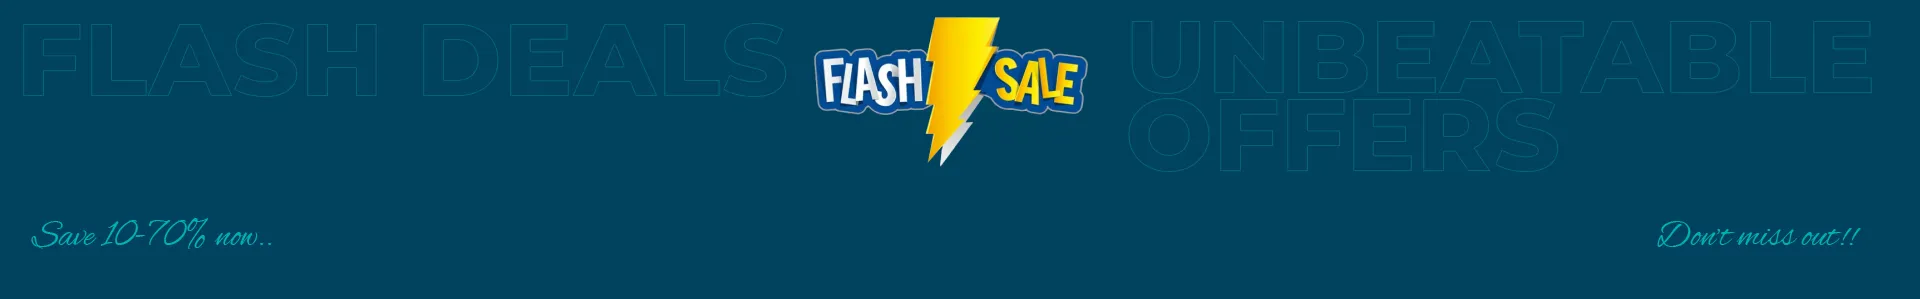 flash sale